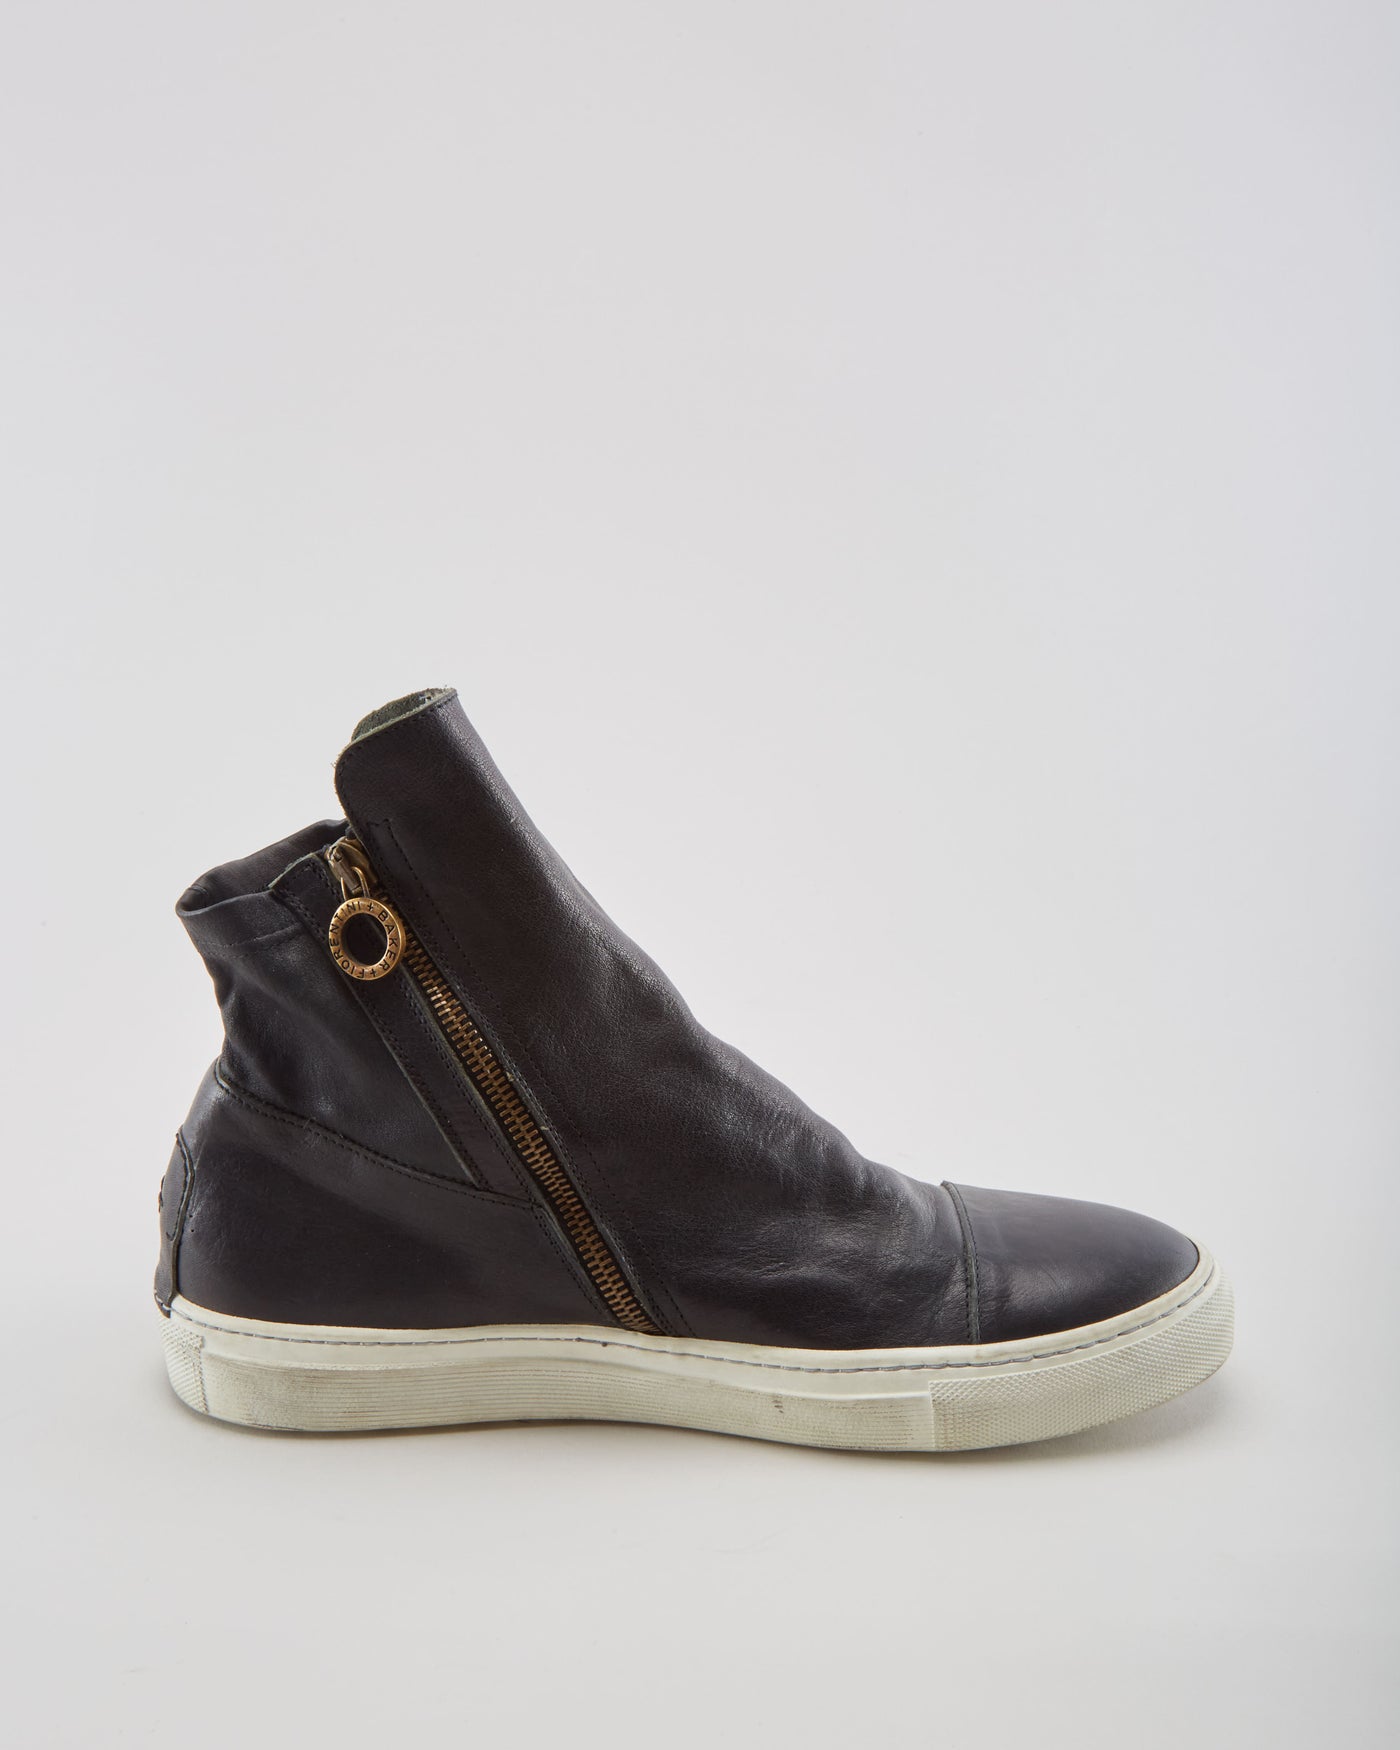 Backer + Fiorentini  Black Leather Shoes - Mens UK 8